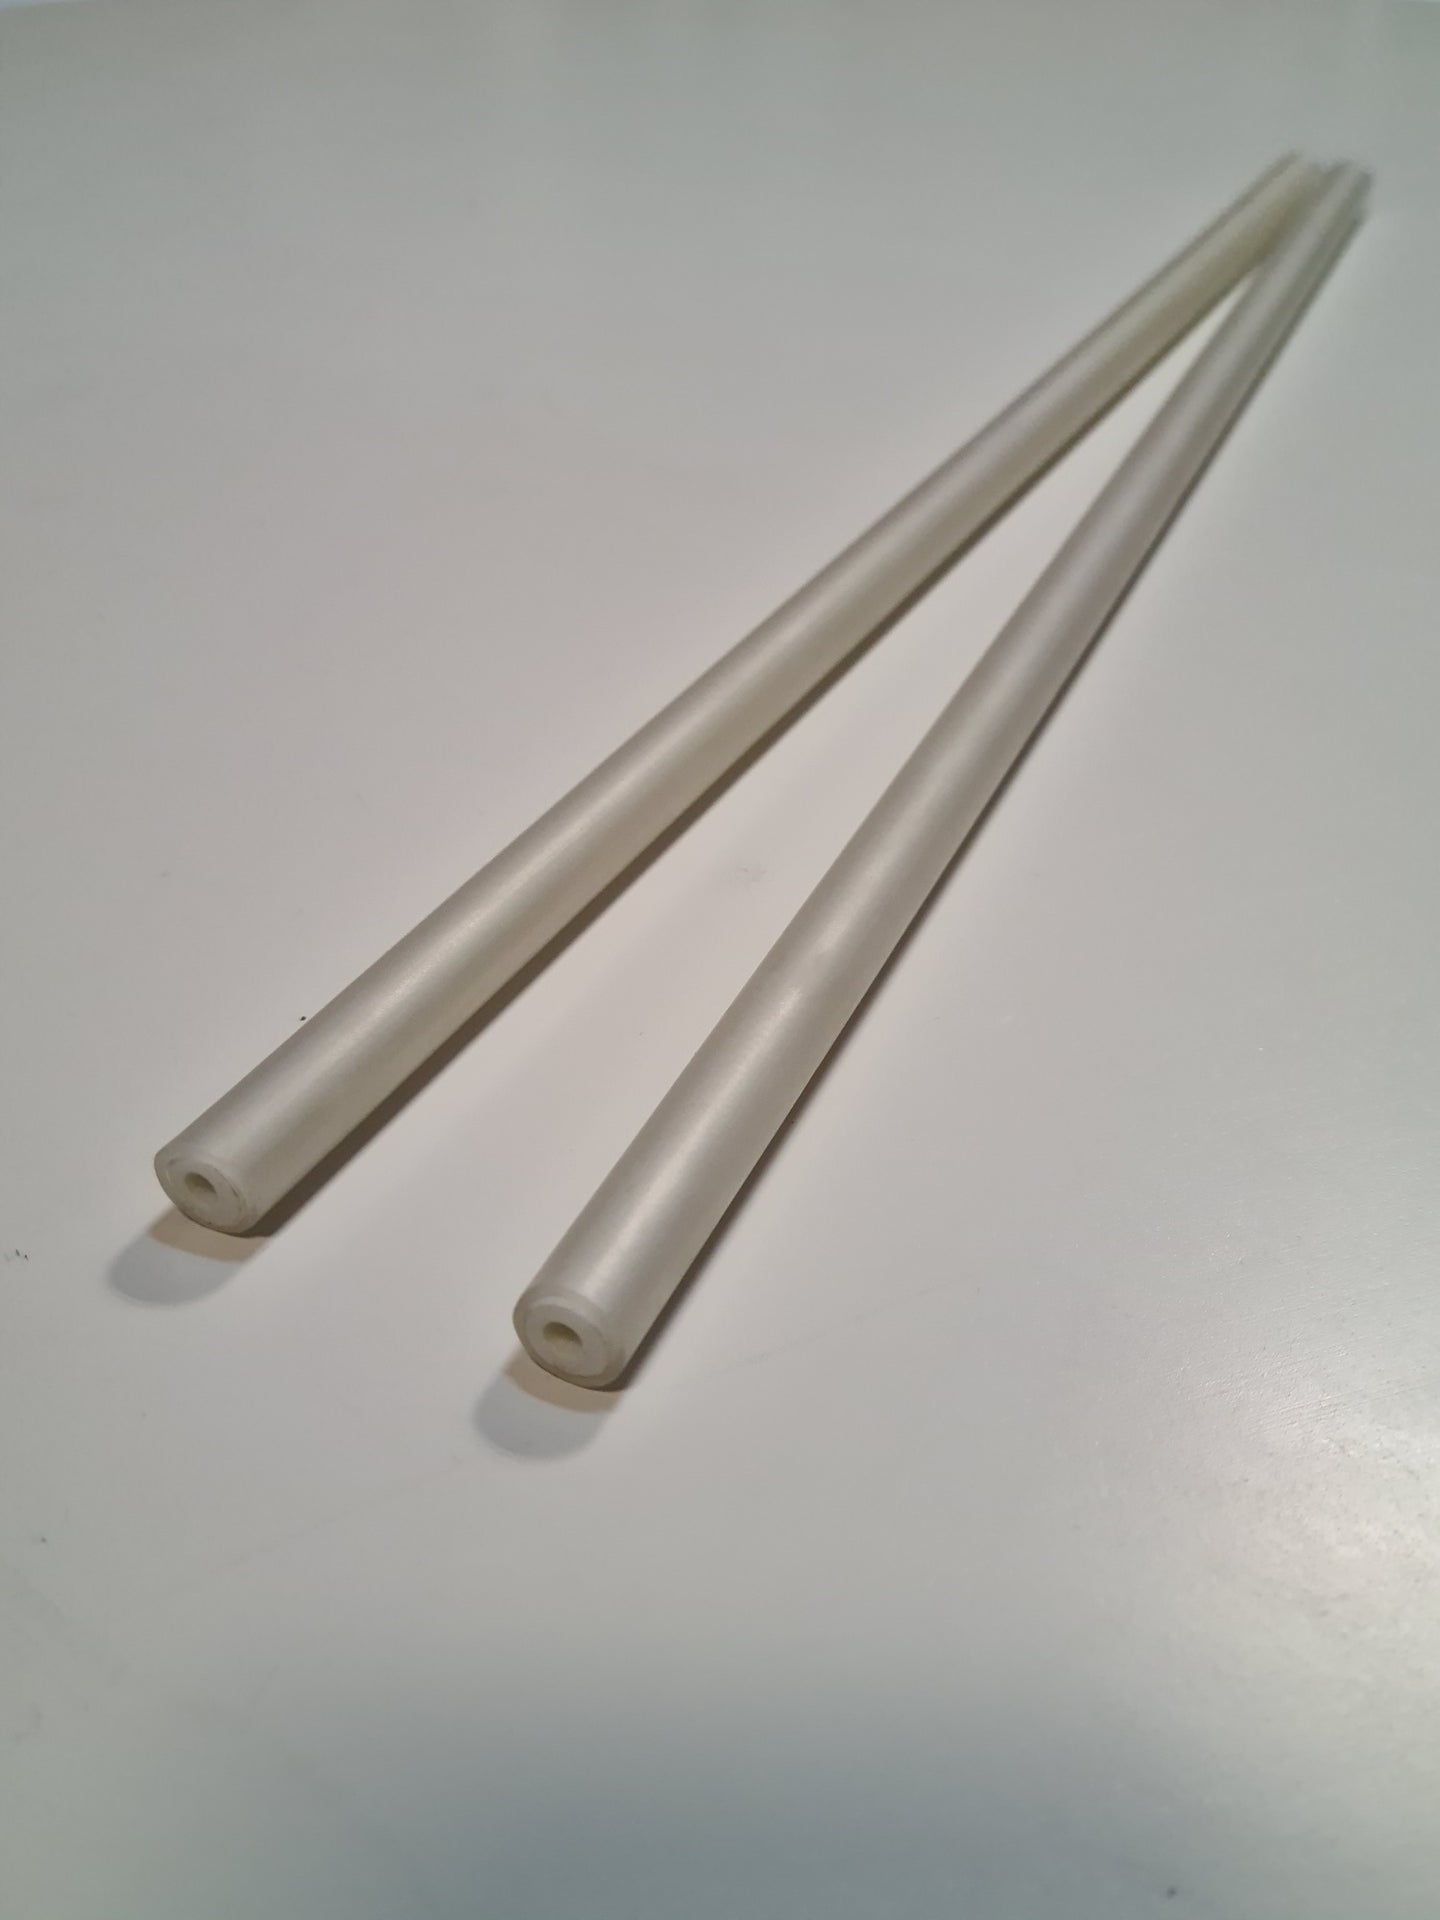 Professional hollow fibre control sticks - Pair - Bargain basement - RRP £19.99